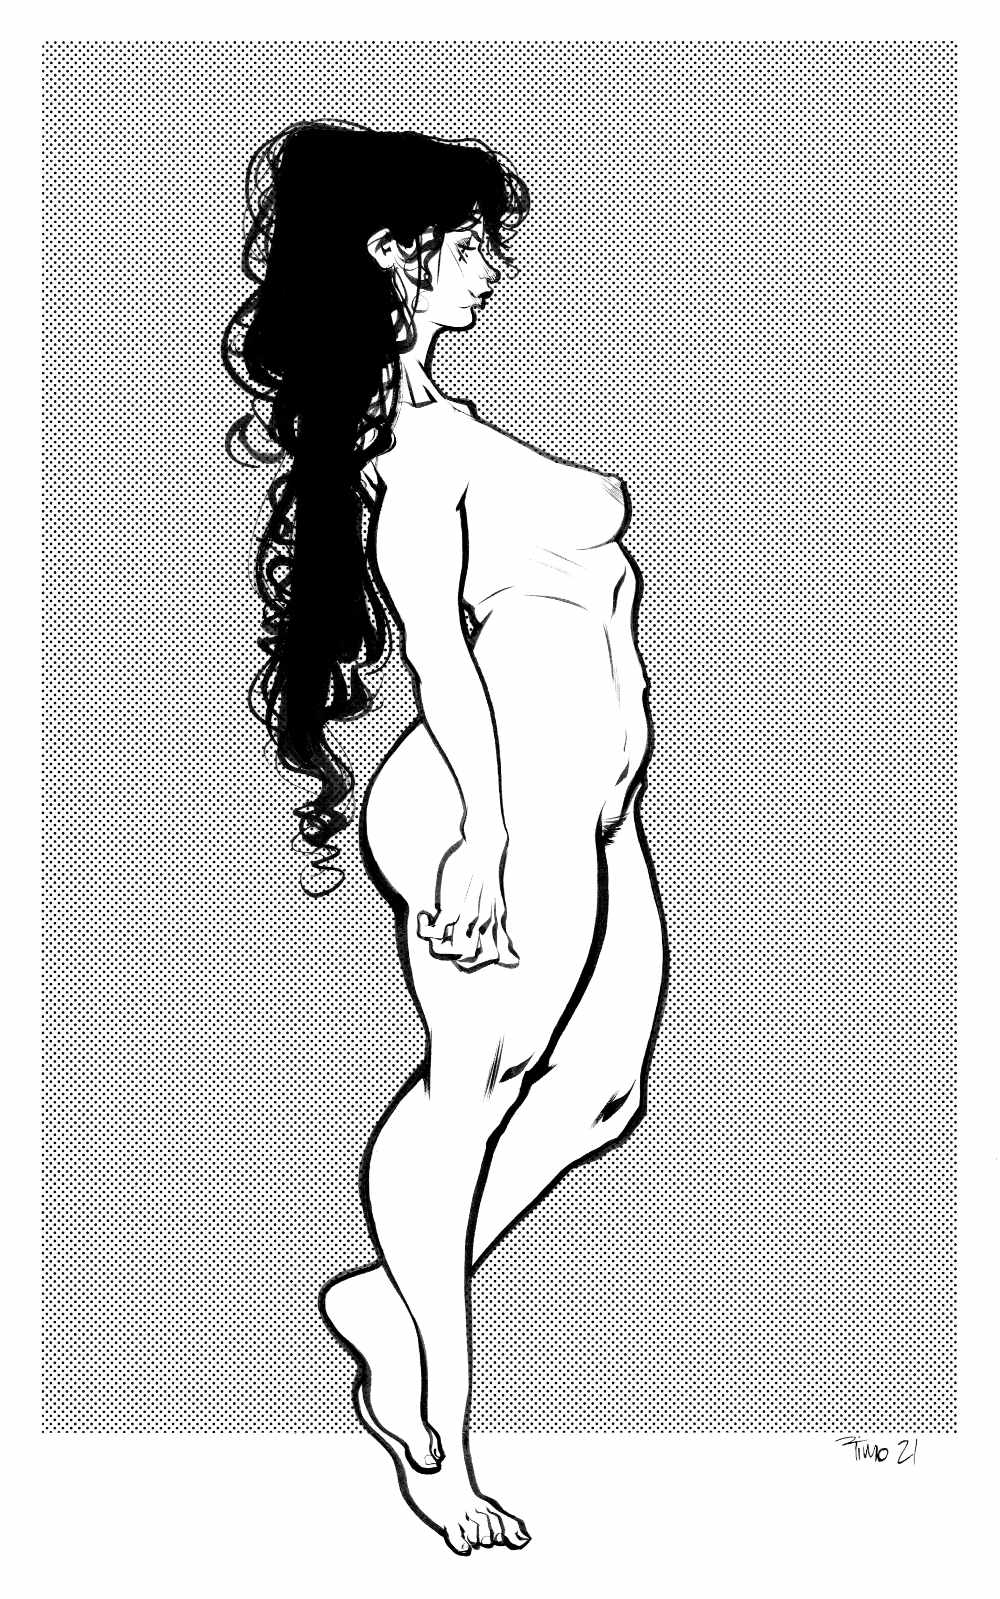 Nude Woman floating Illustration ink brush screentone